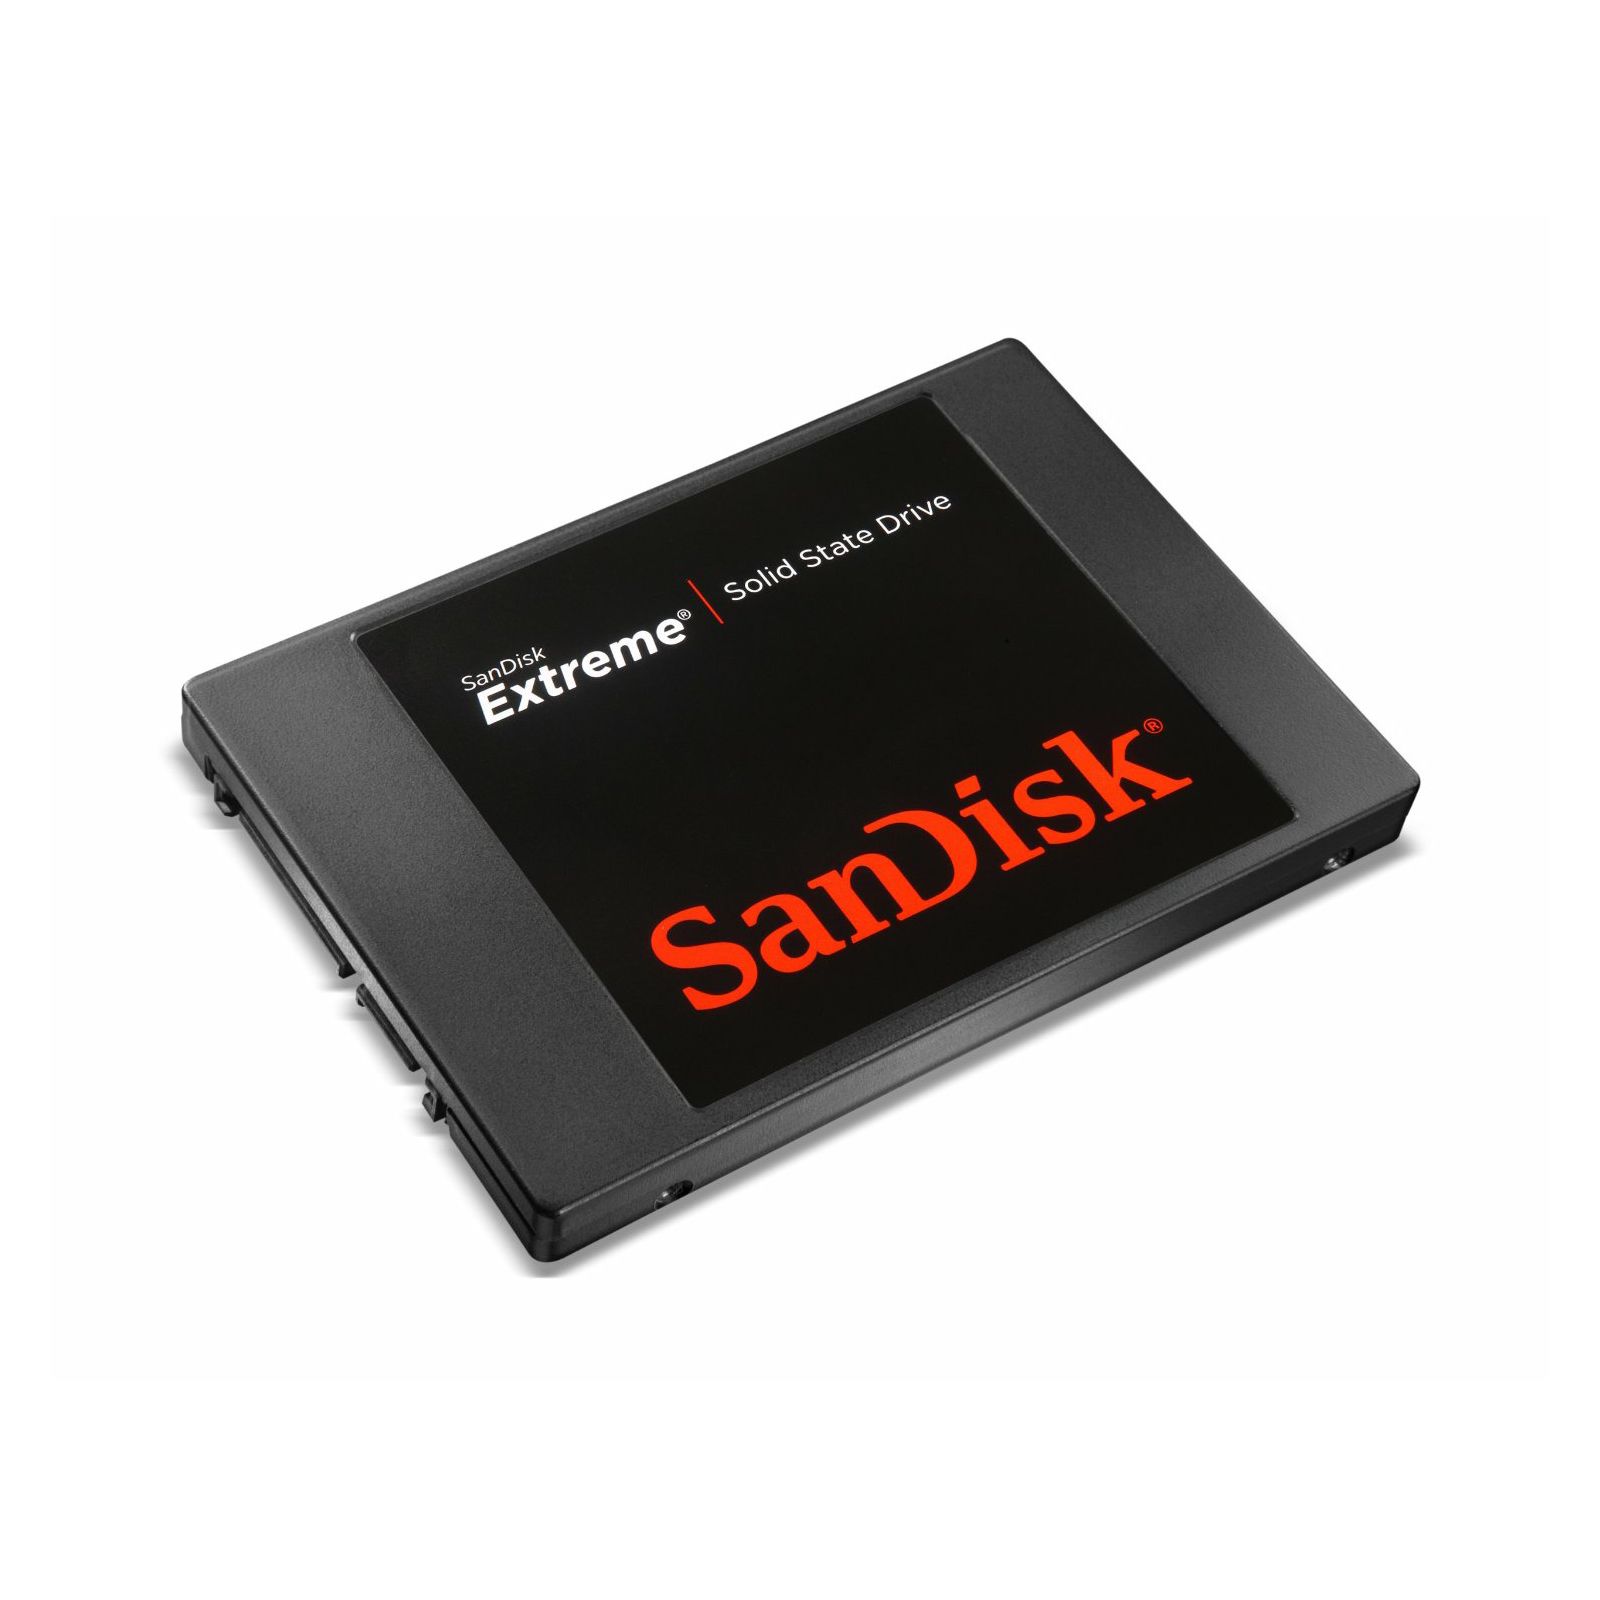 SanDisk SSD Extreme 240GB SDSSDX-240G-G25 Solid State Drive Disk